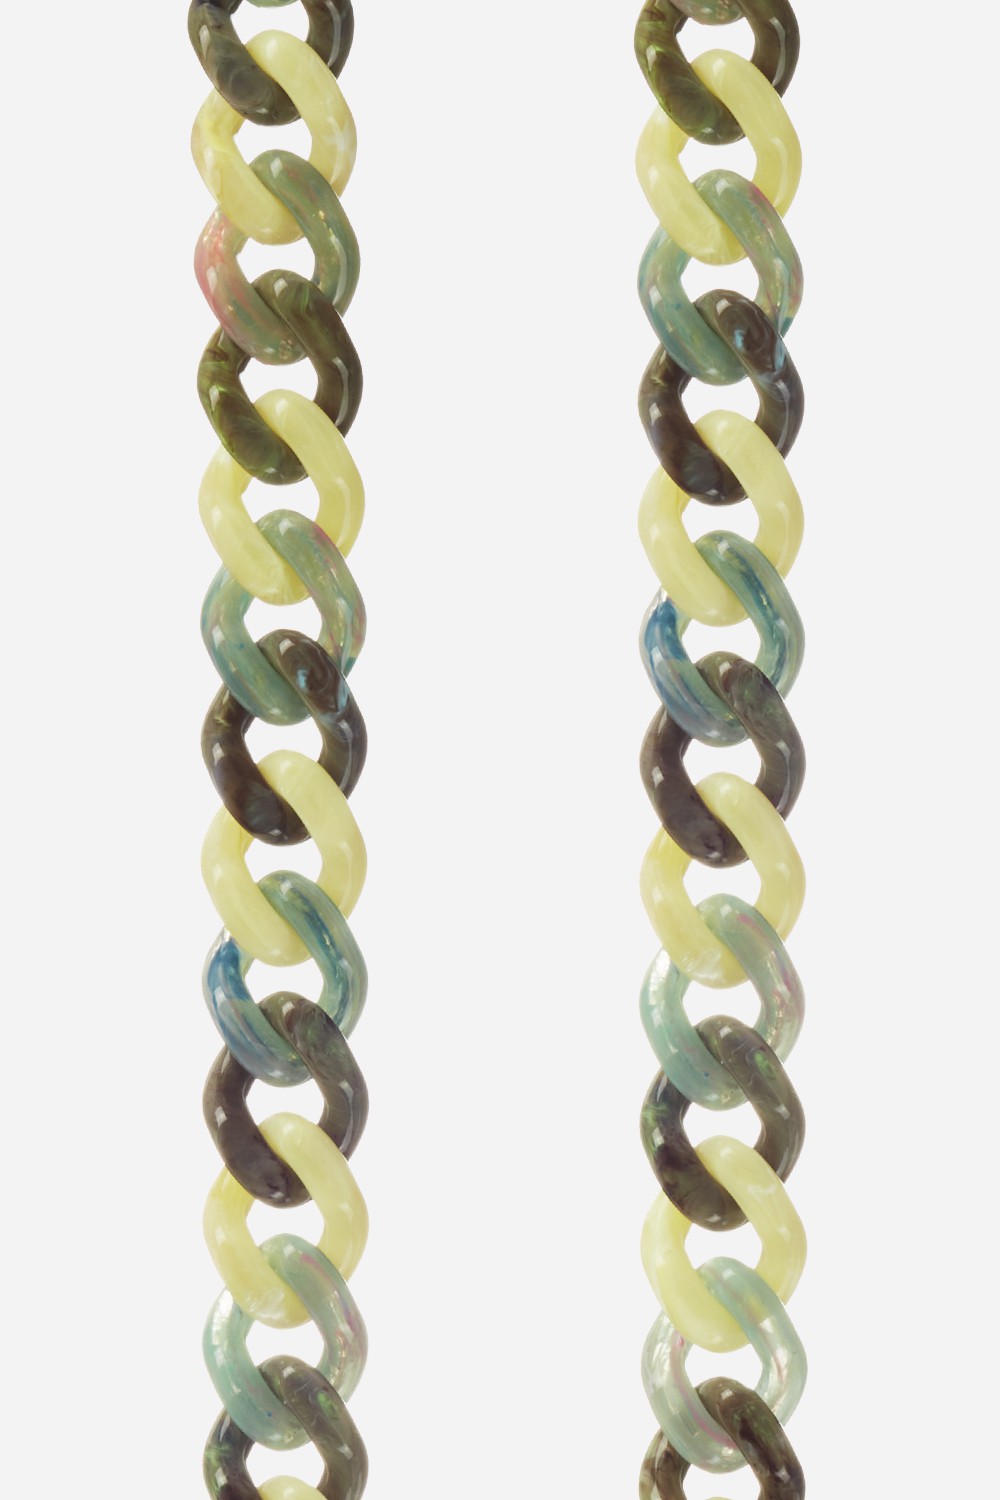 Gia Green Long Chain 120 cm